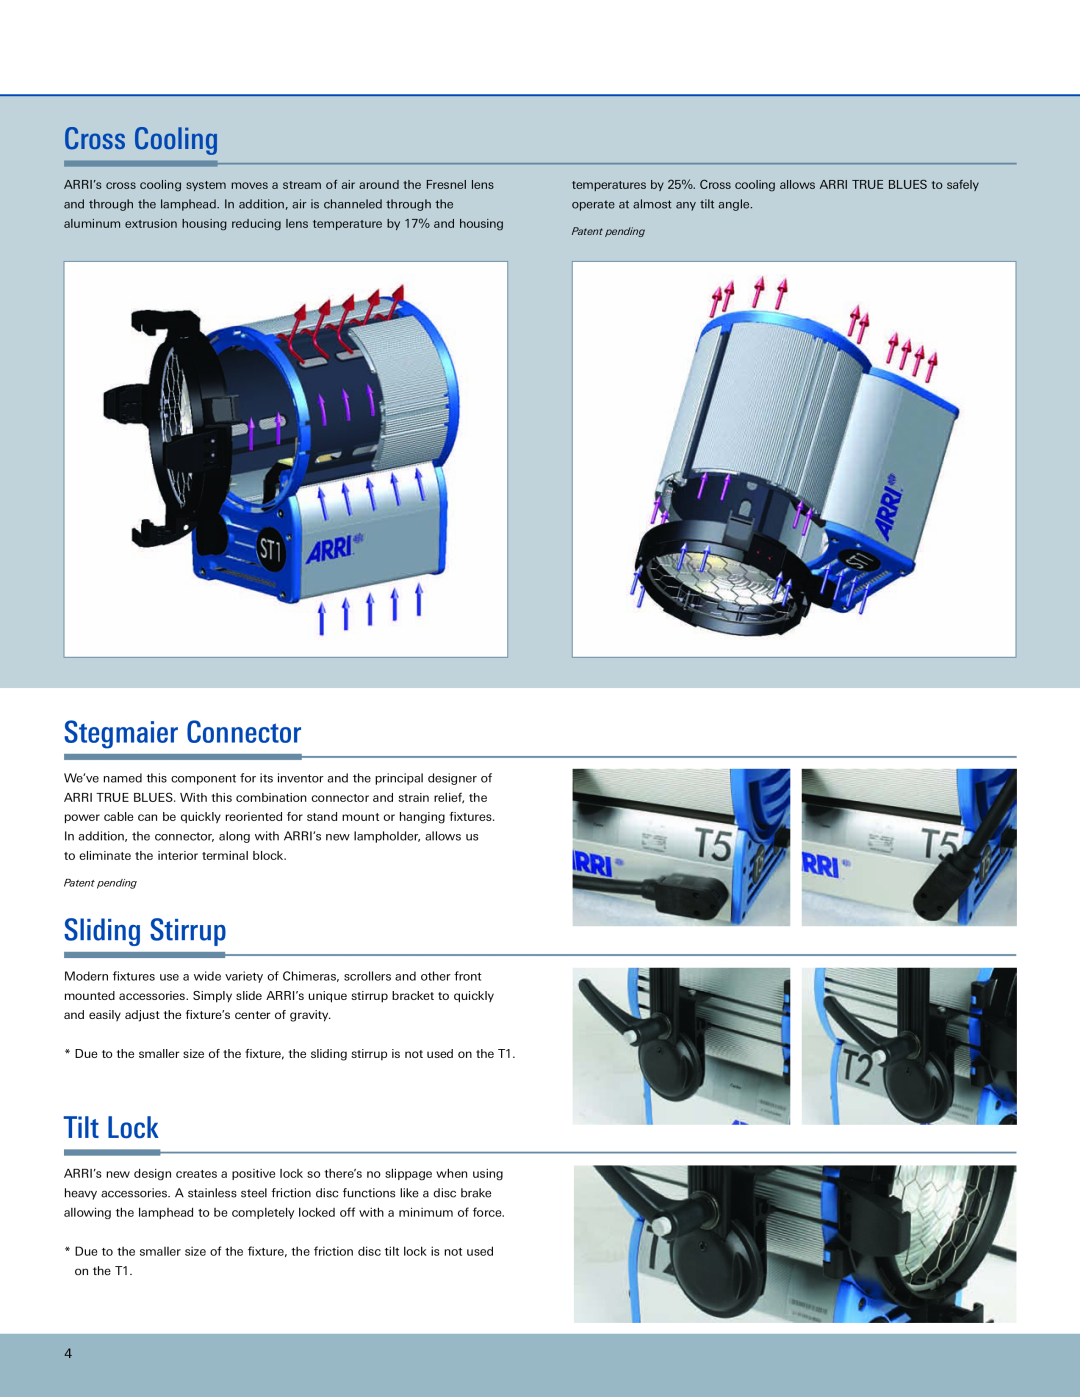 ARRI ARRI TRUE BLUE manual Cross Cooling, Stegmaier Connector, Sliding Stirrup, Tilt Lock 